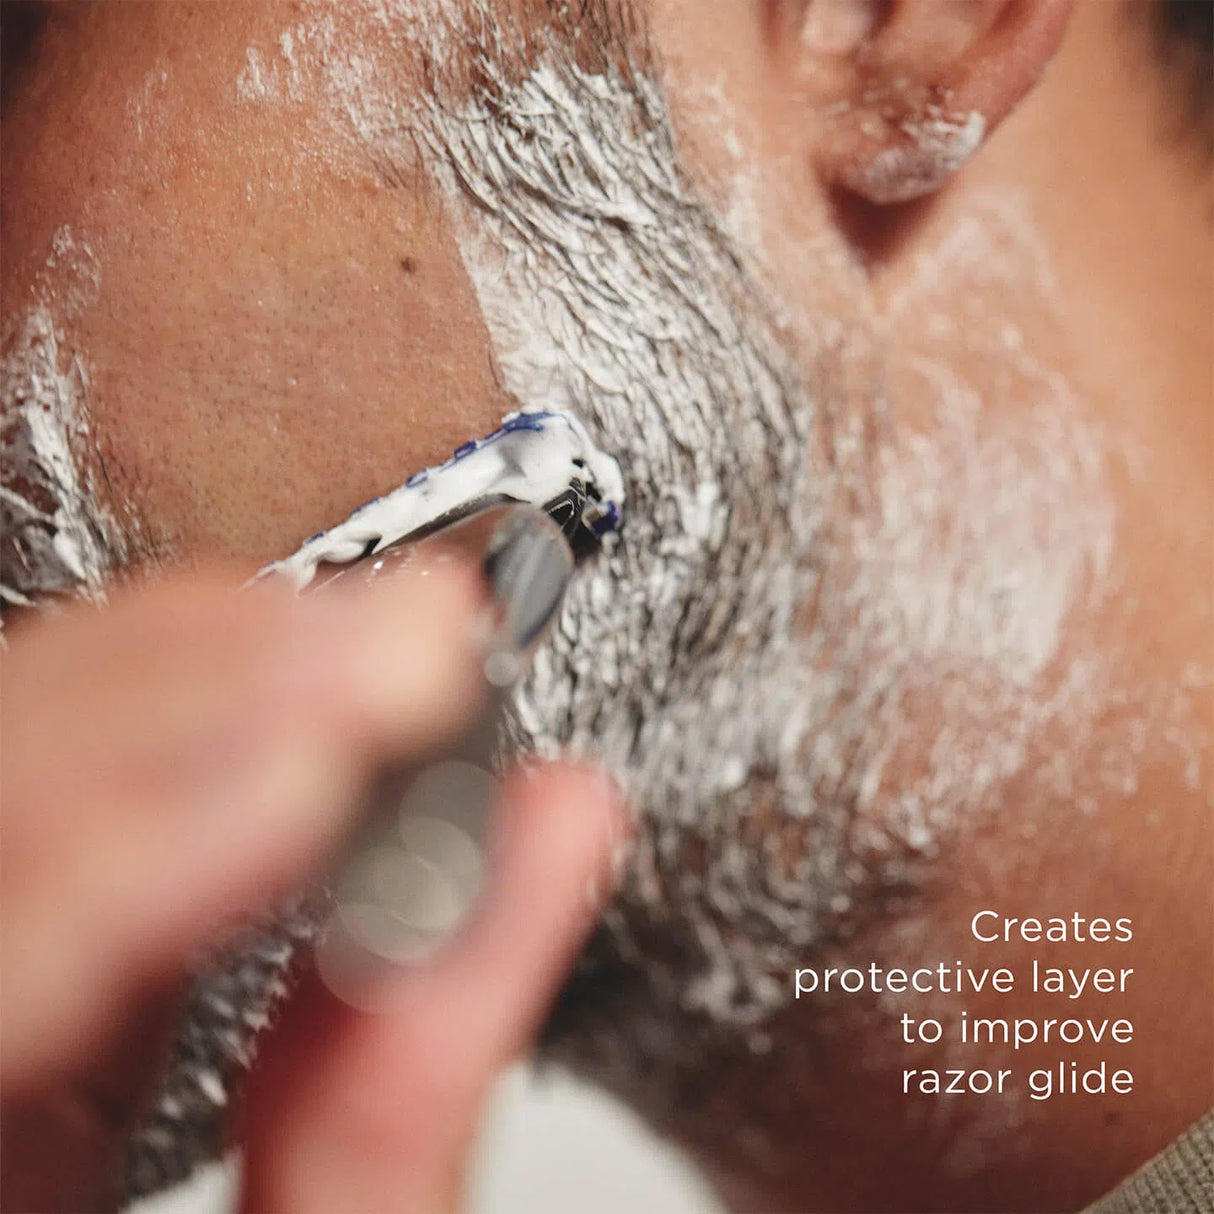 Pre-Shave Oil-The Art of Shaving